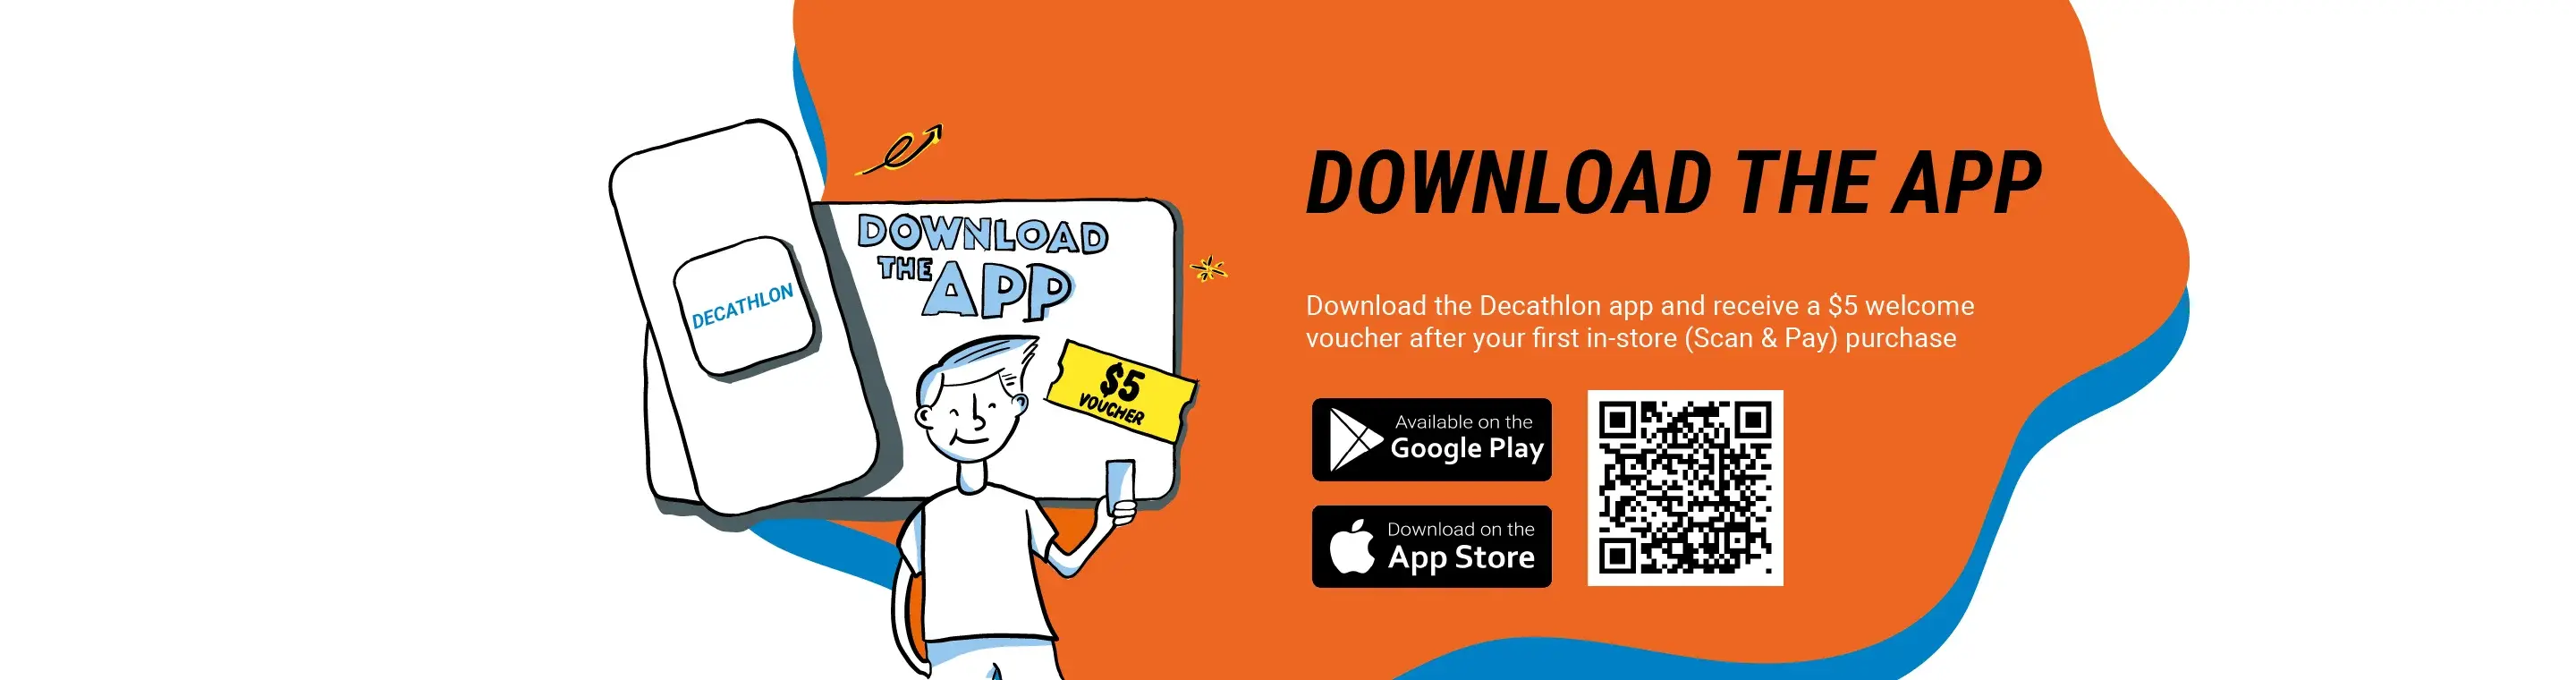 download-the-decathlon-app